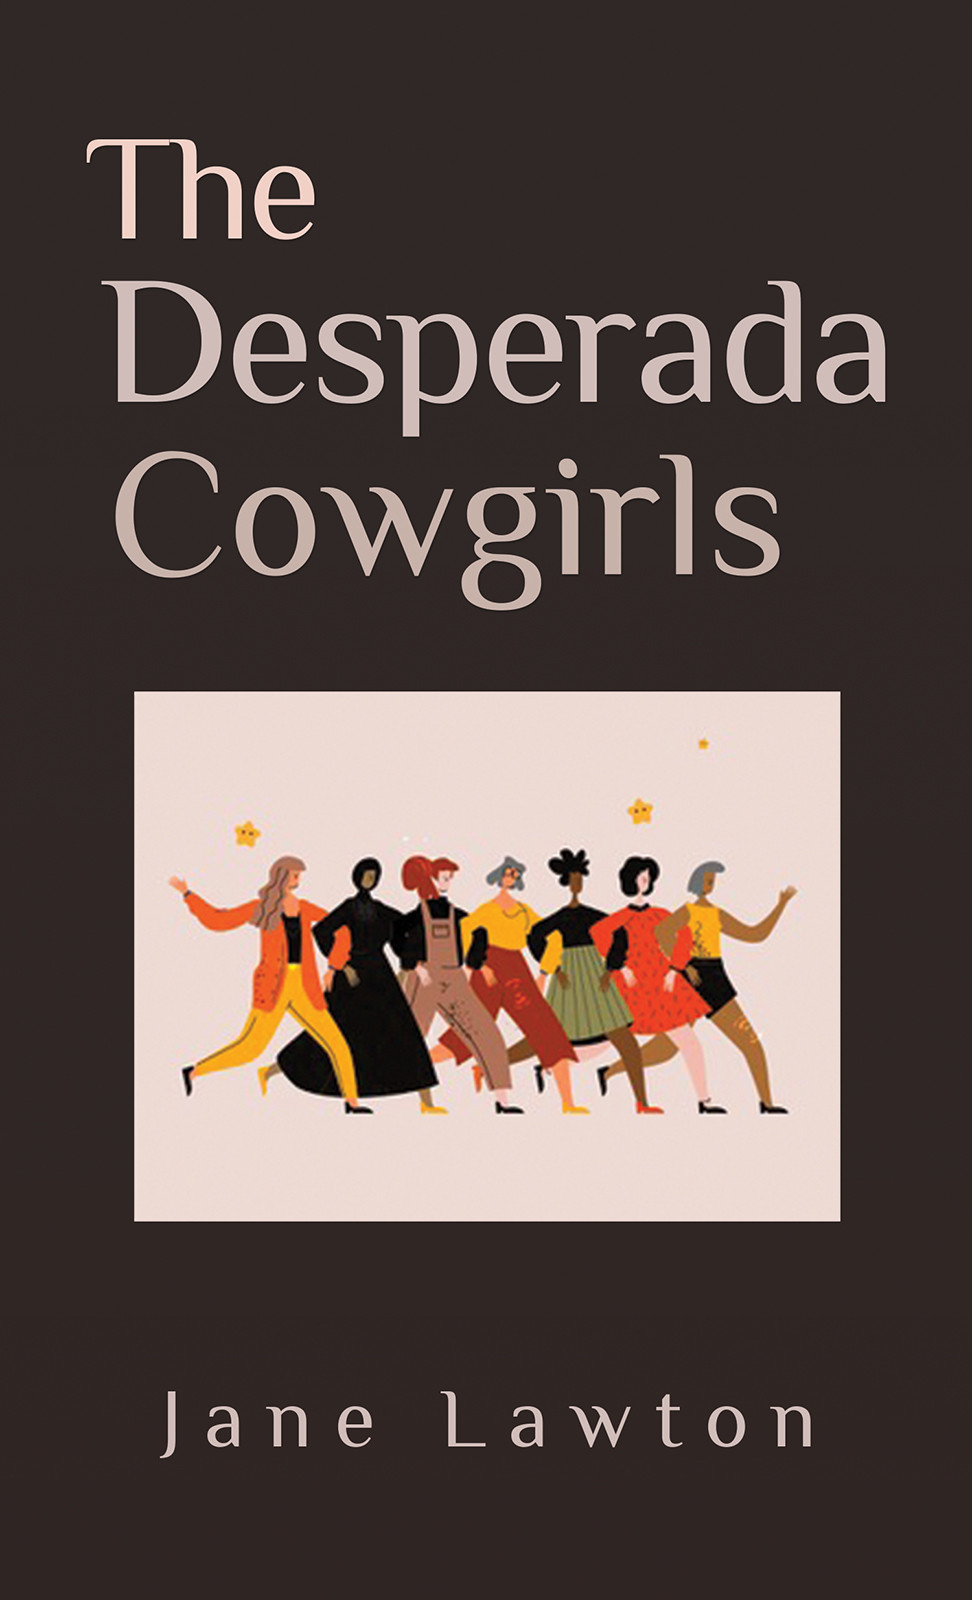 The Desperada Cowgirls